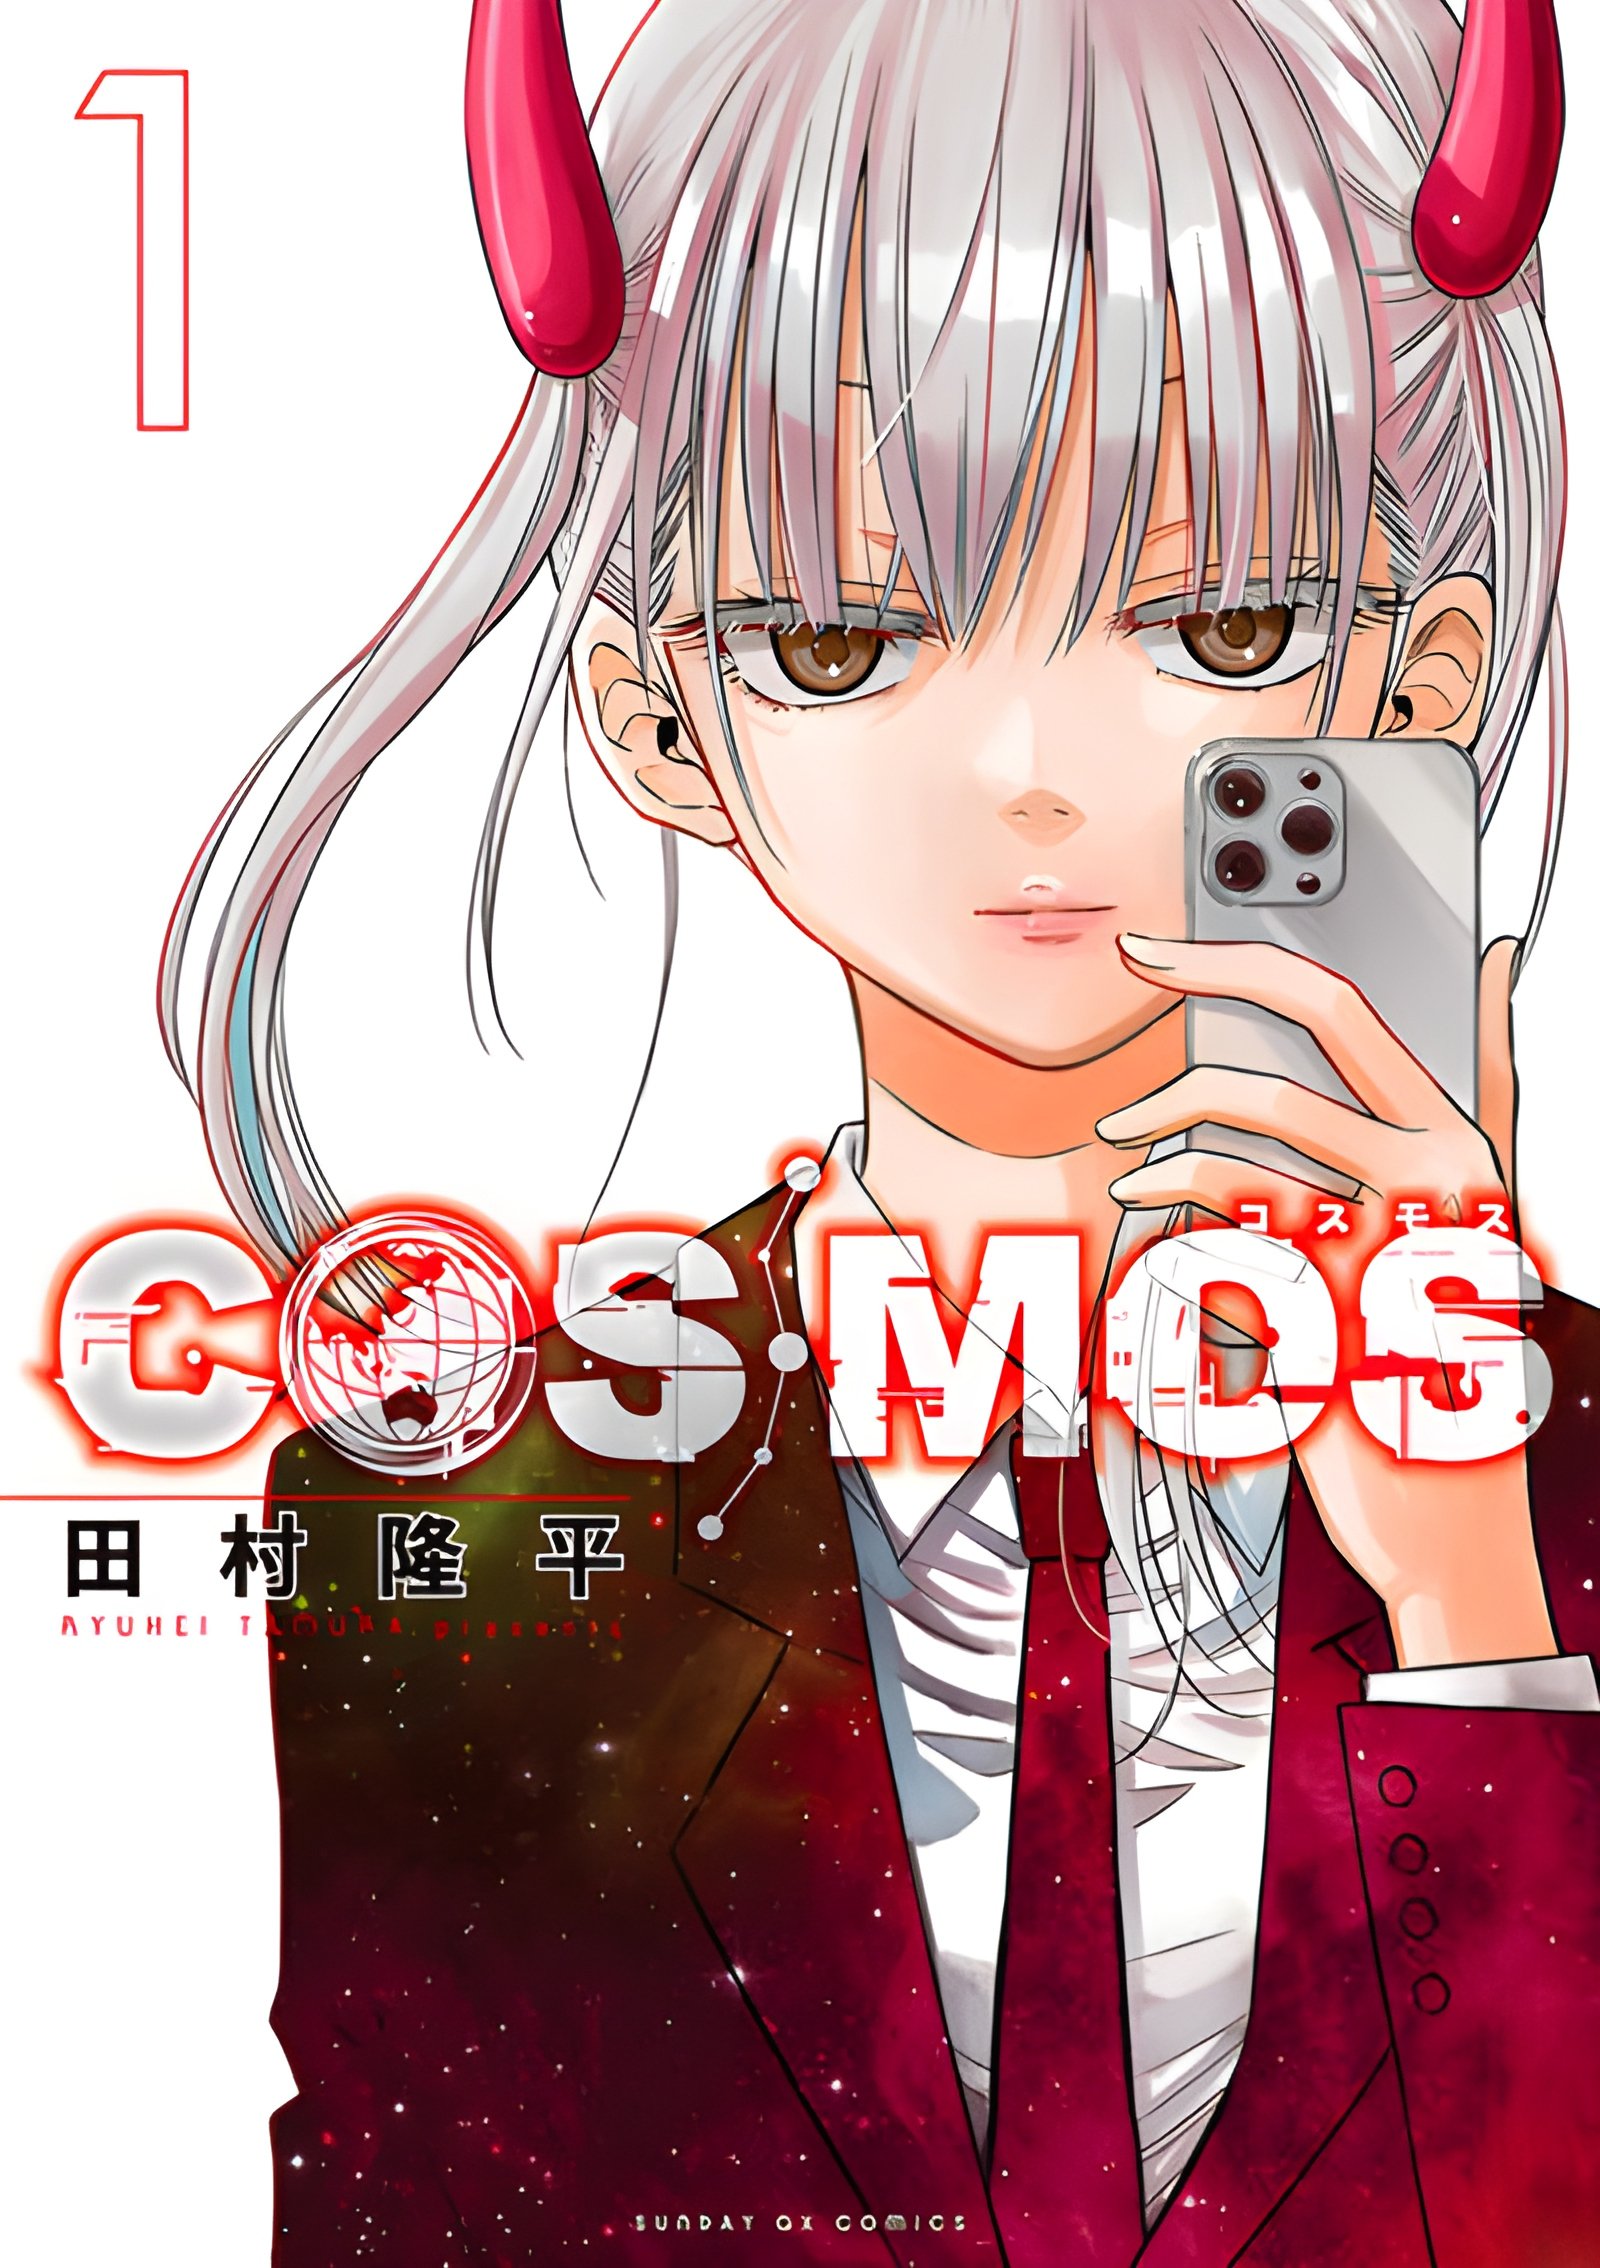 Oricon and Shoseki manga sales on X: Tomodachi Game estimated